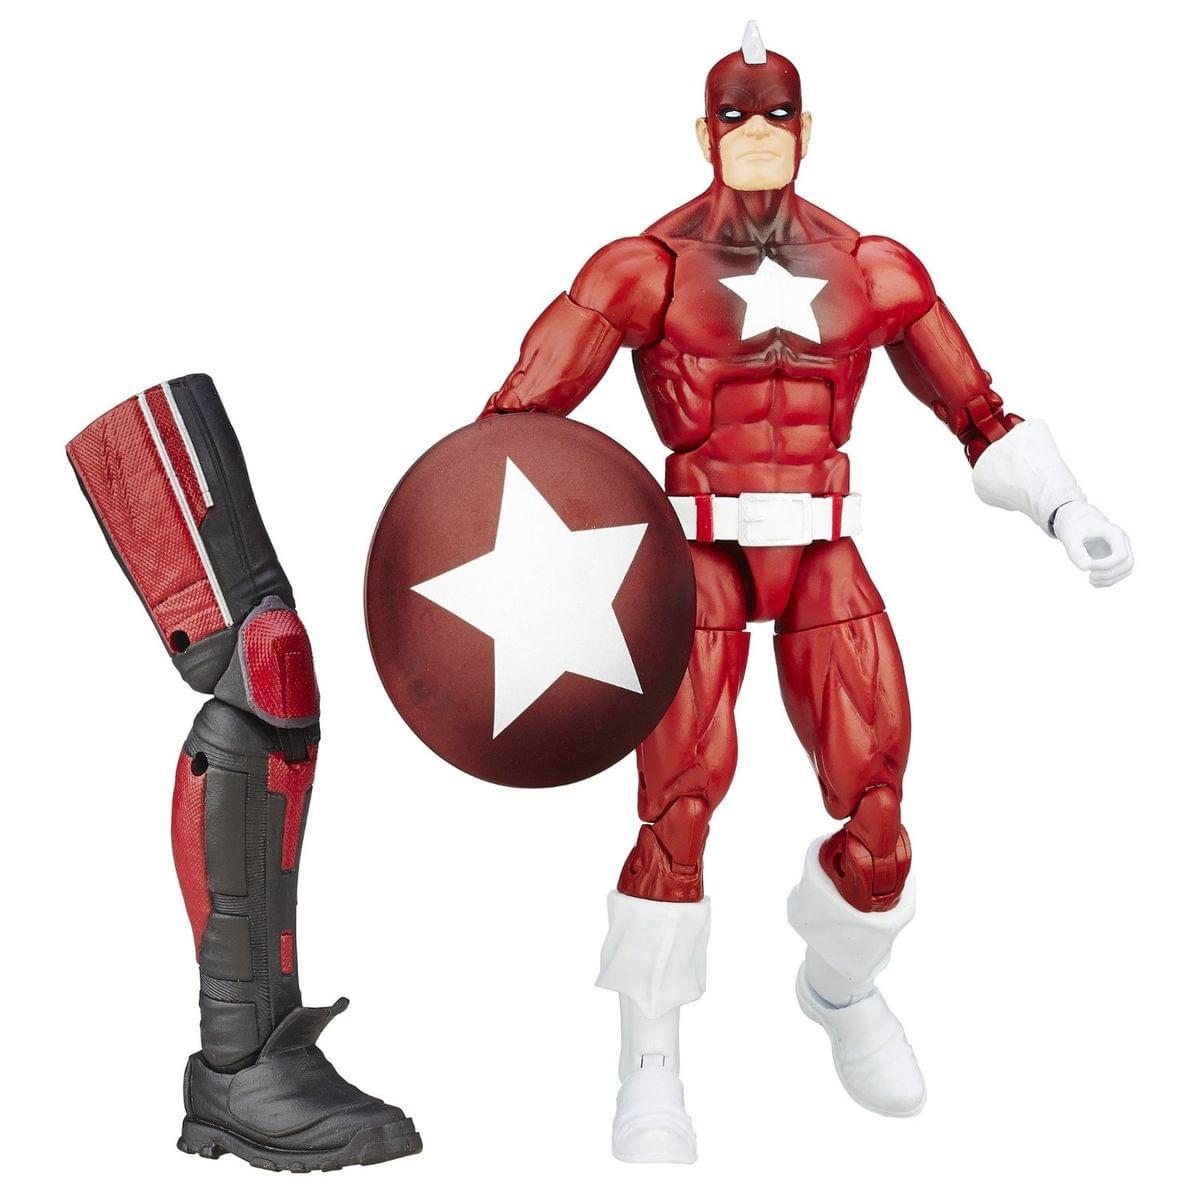 Marvel Legends Captain America 6" Action Figure Series: Red Guardian